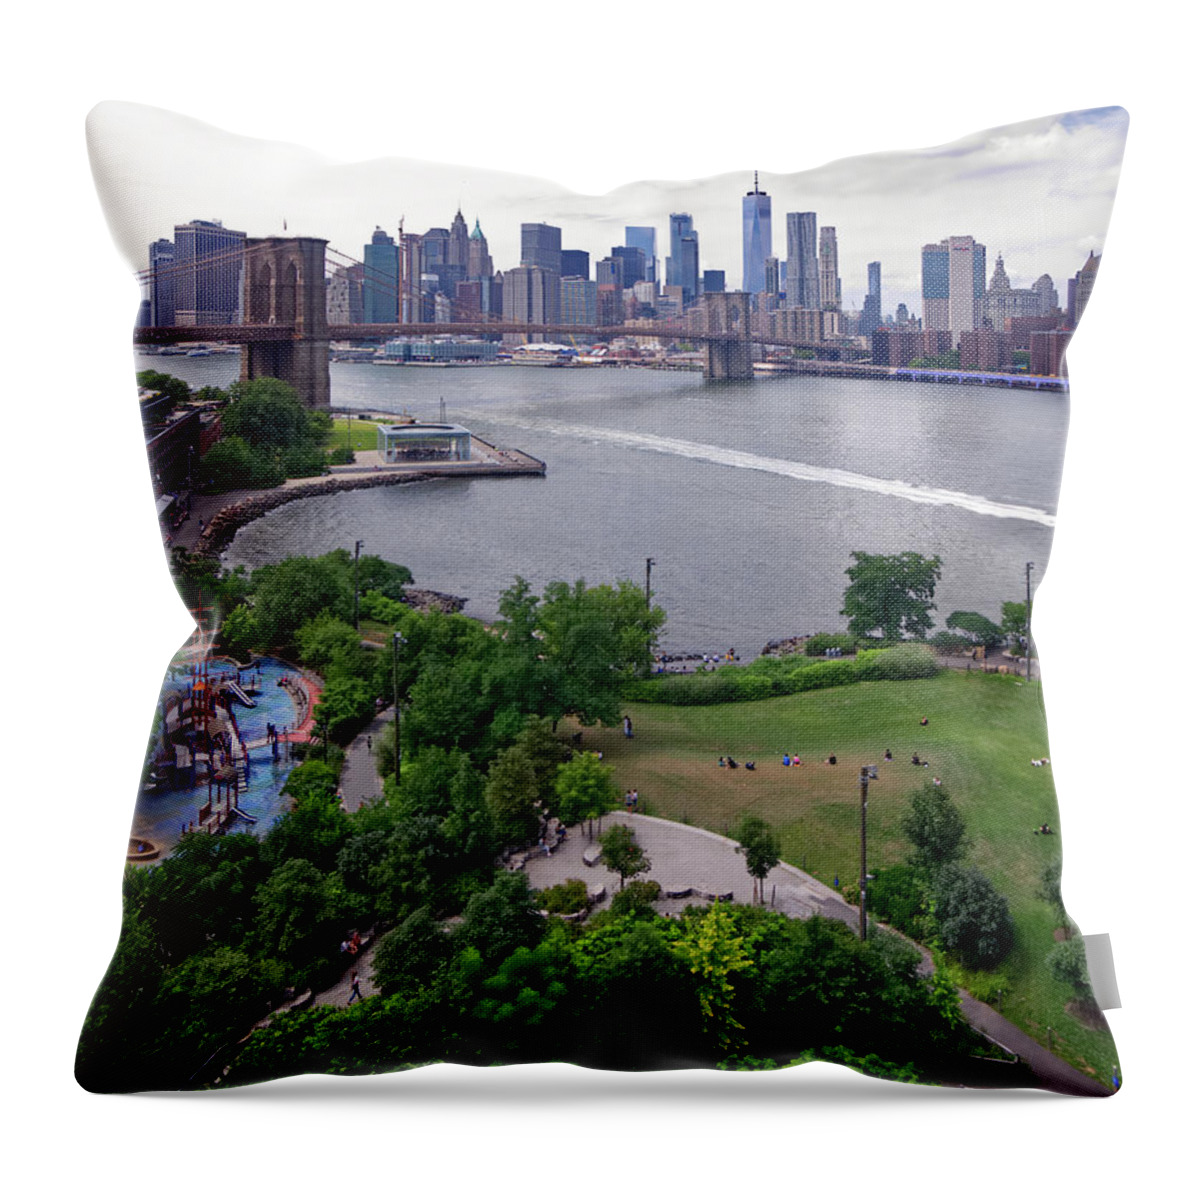 Brooklyn Bridge Park Throw Pillow featuring the photograph Brooklyn Bridge Park by S Paul Sahm